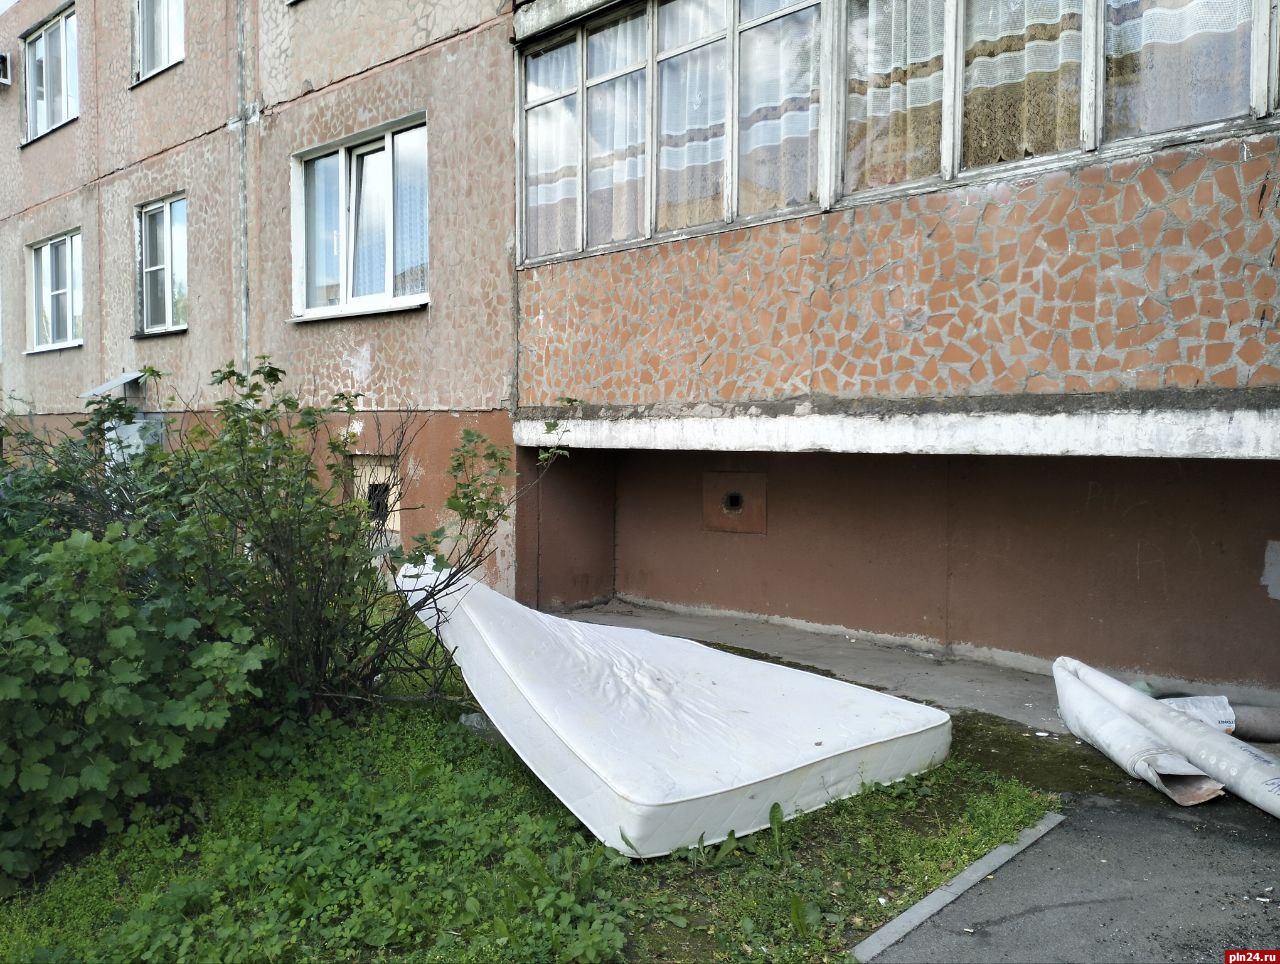 Фотофакт: Матрац выпал с балкона в Пскове